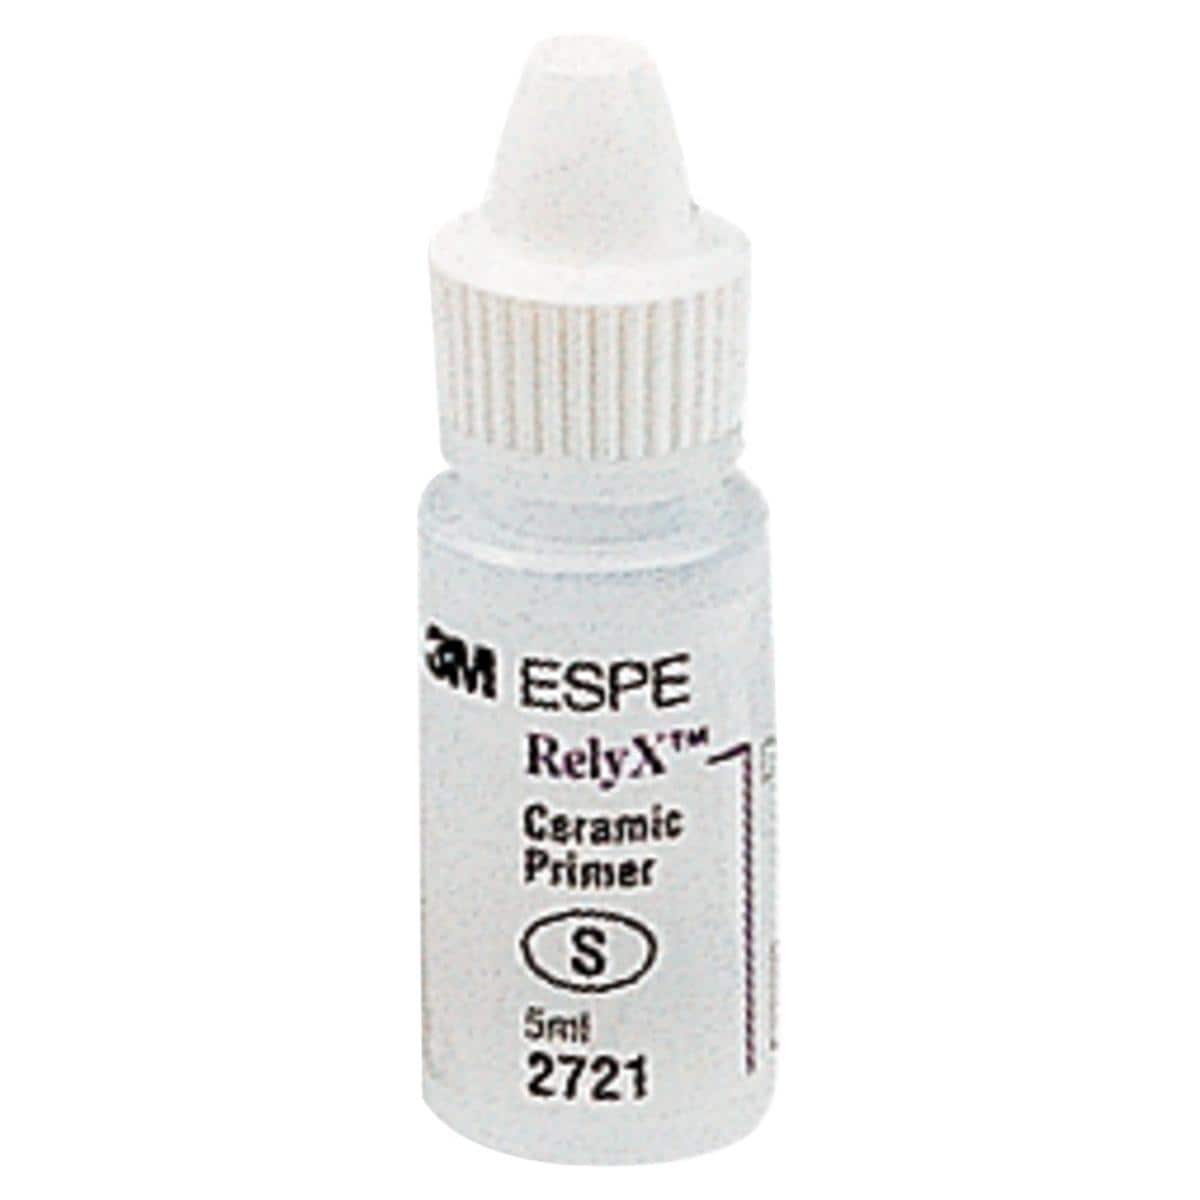 RelyX Ceramic Primer - Flacon, 5 ml